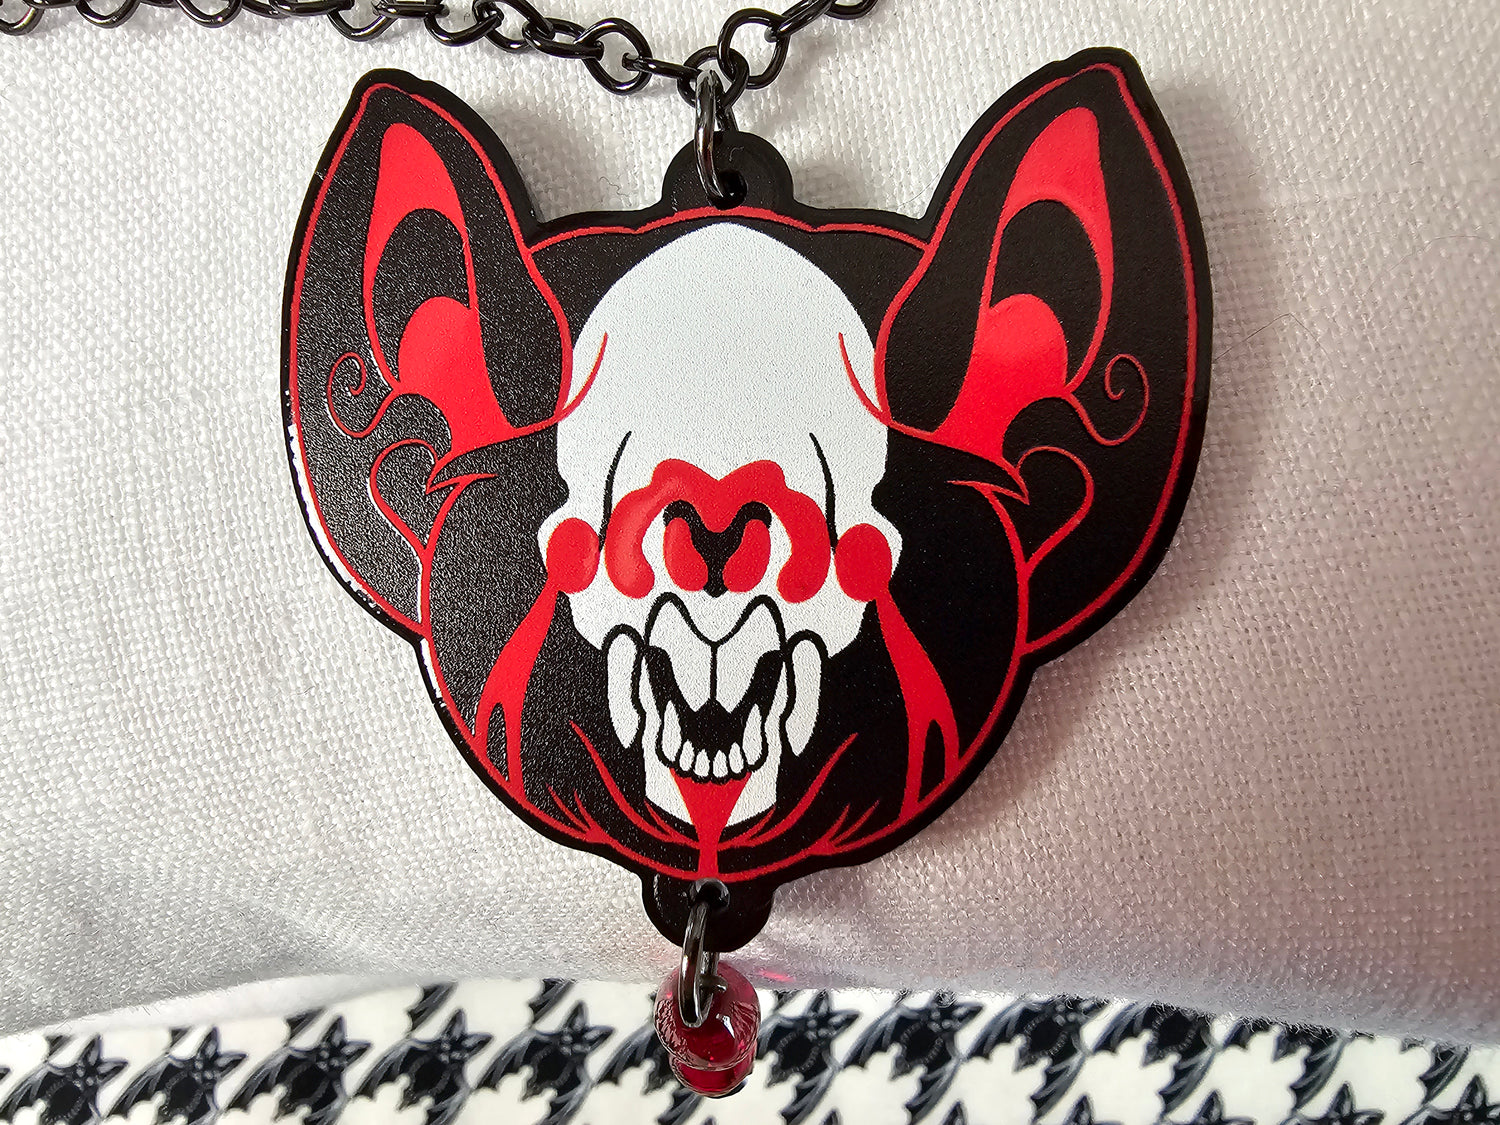 Vampire Bat Gothic Blood Drop Necklace